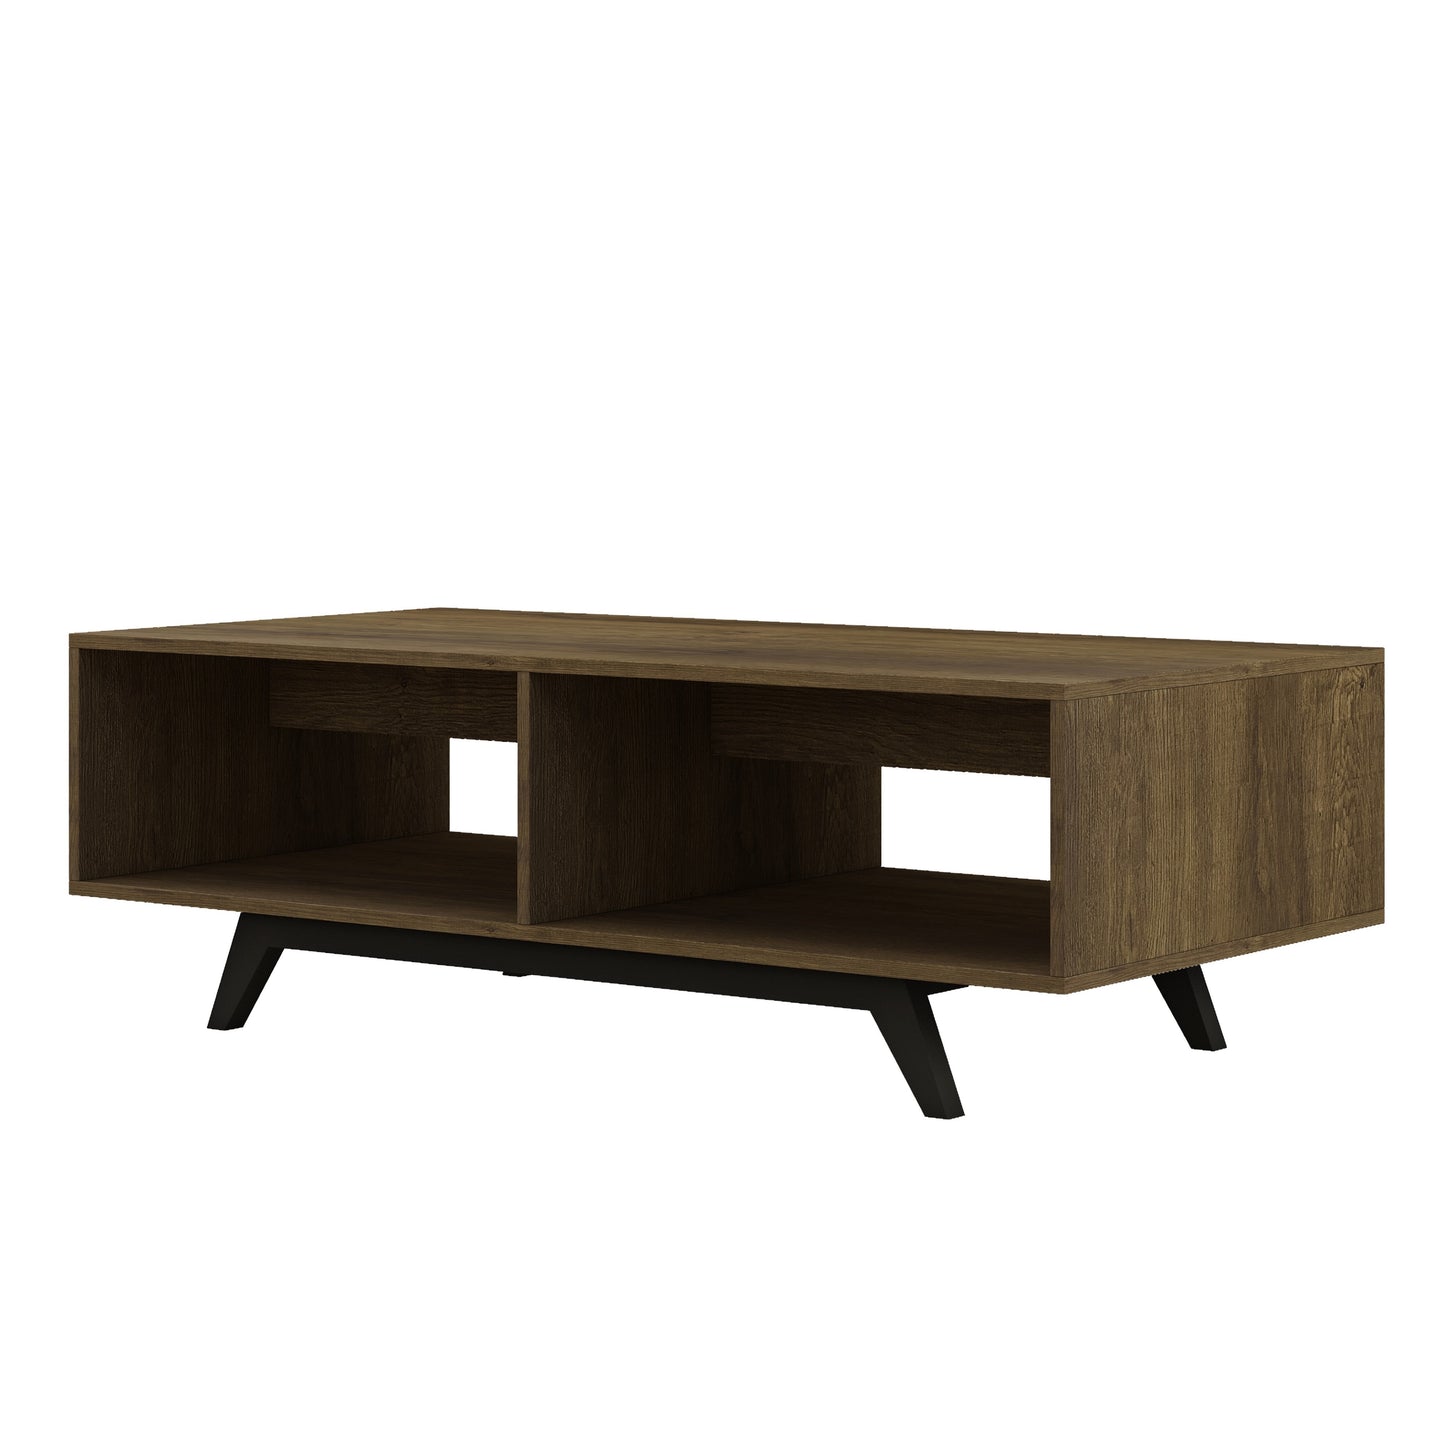 Tauris Metro Coffee Tables 1200mm Two Open Shelves, Solid Rubber Wood Legs, Dark Oak